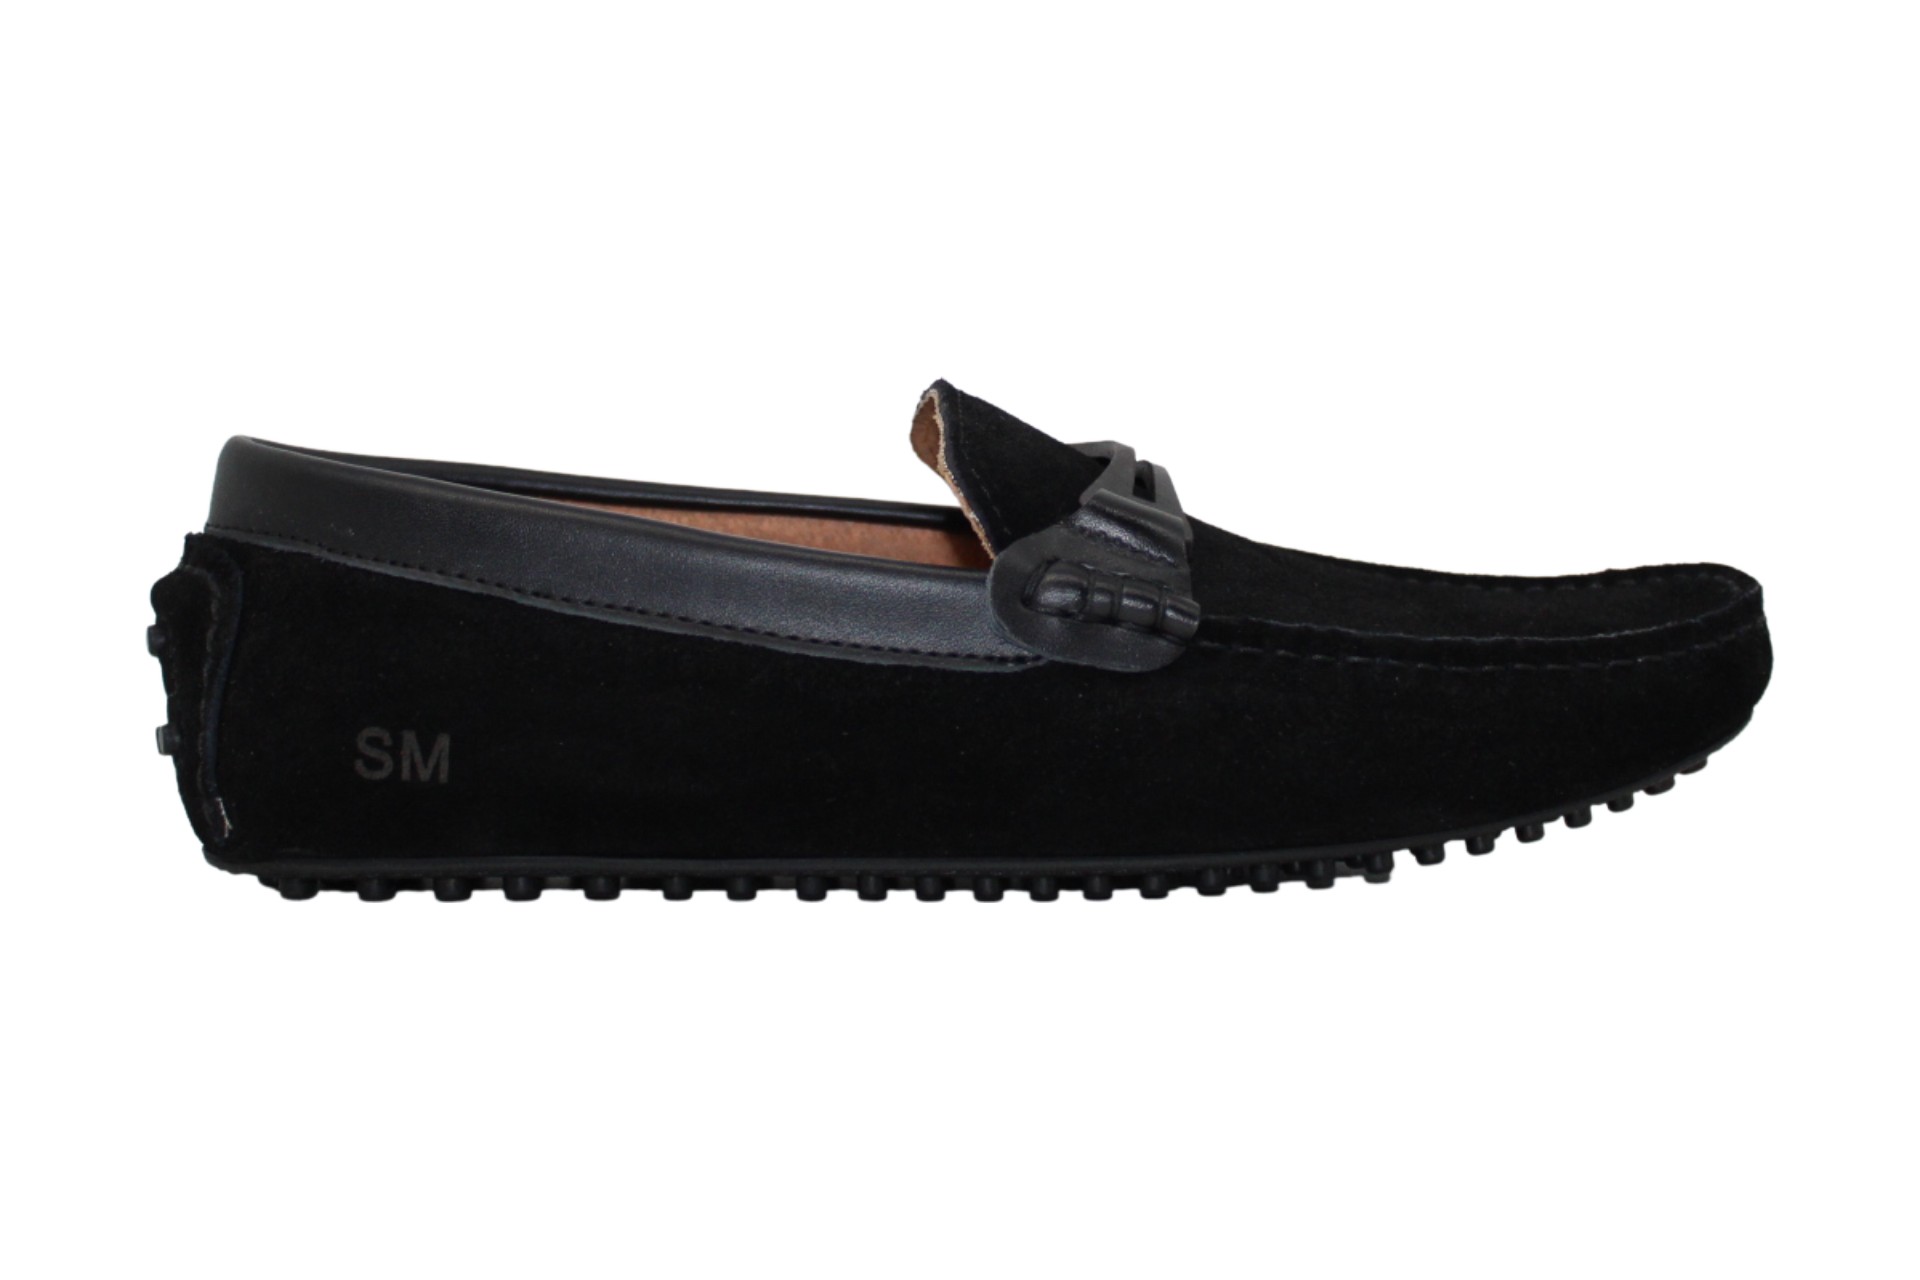 Steve Madden Noris Mens Black Leather Dress Slip On Loafers Shoes 11